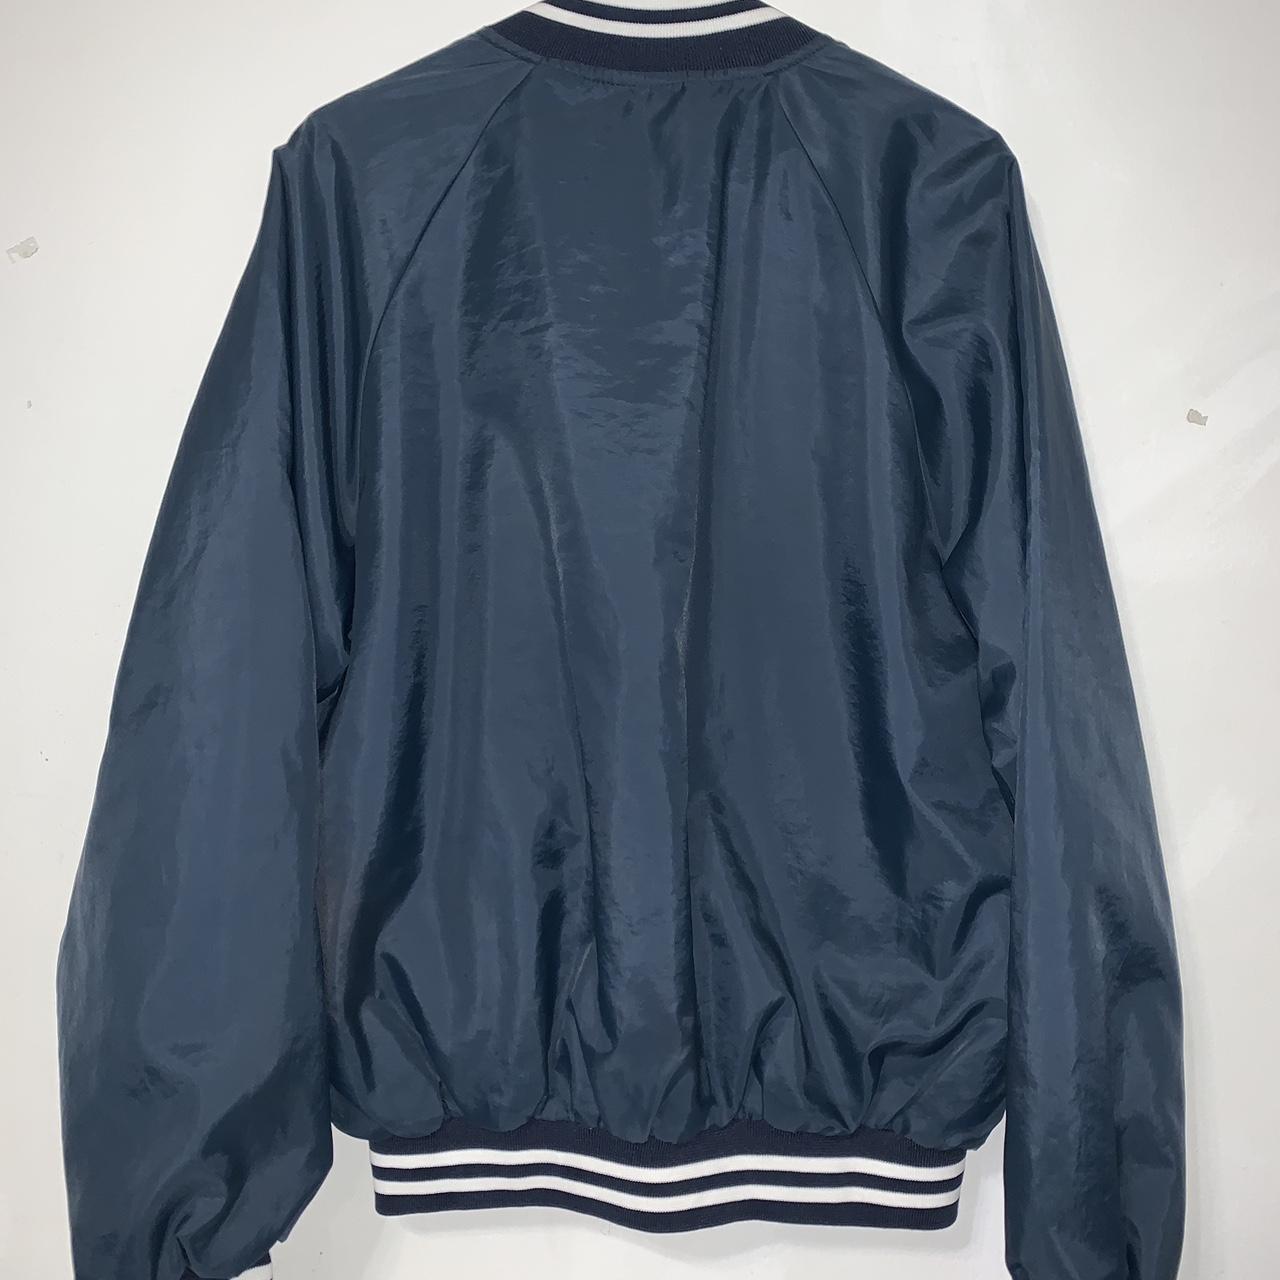 Vintage 80's FBI Academy Windbreaker Jacket Size... - Depop